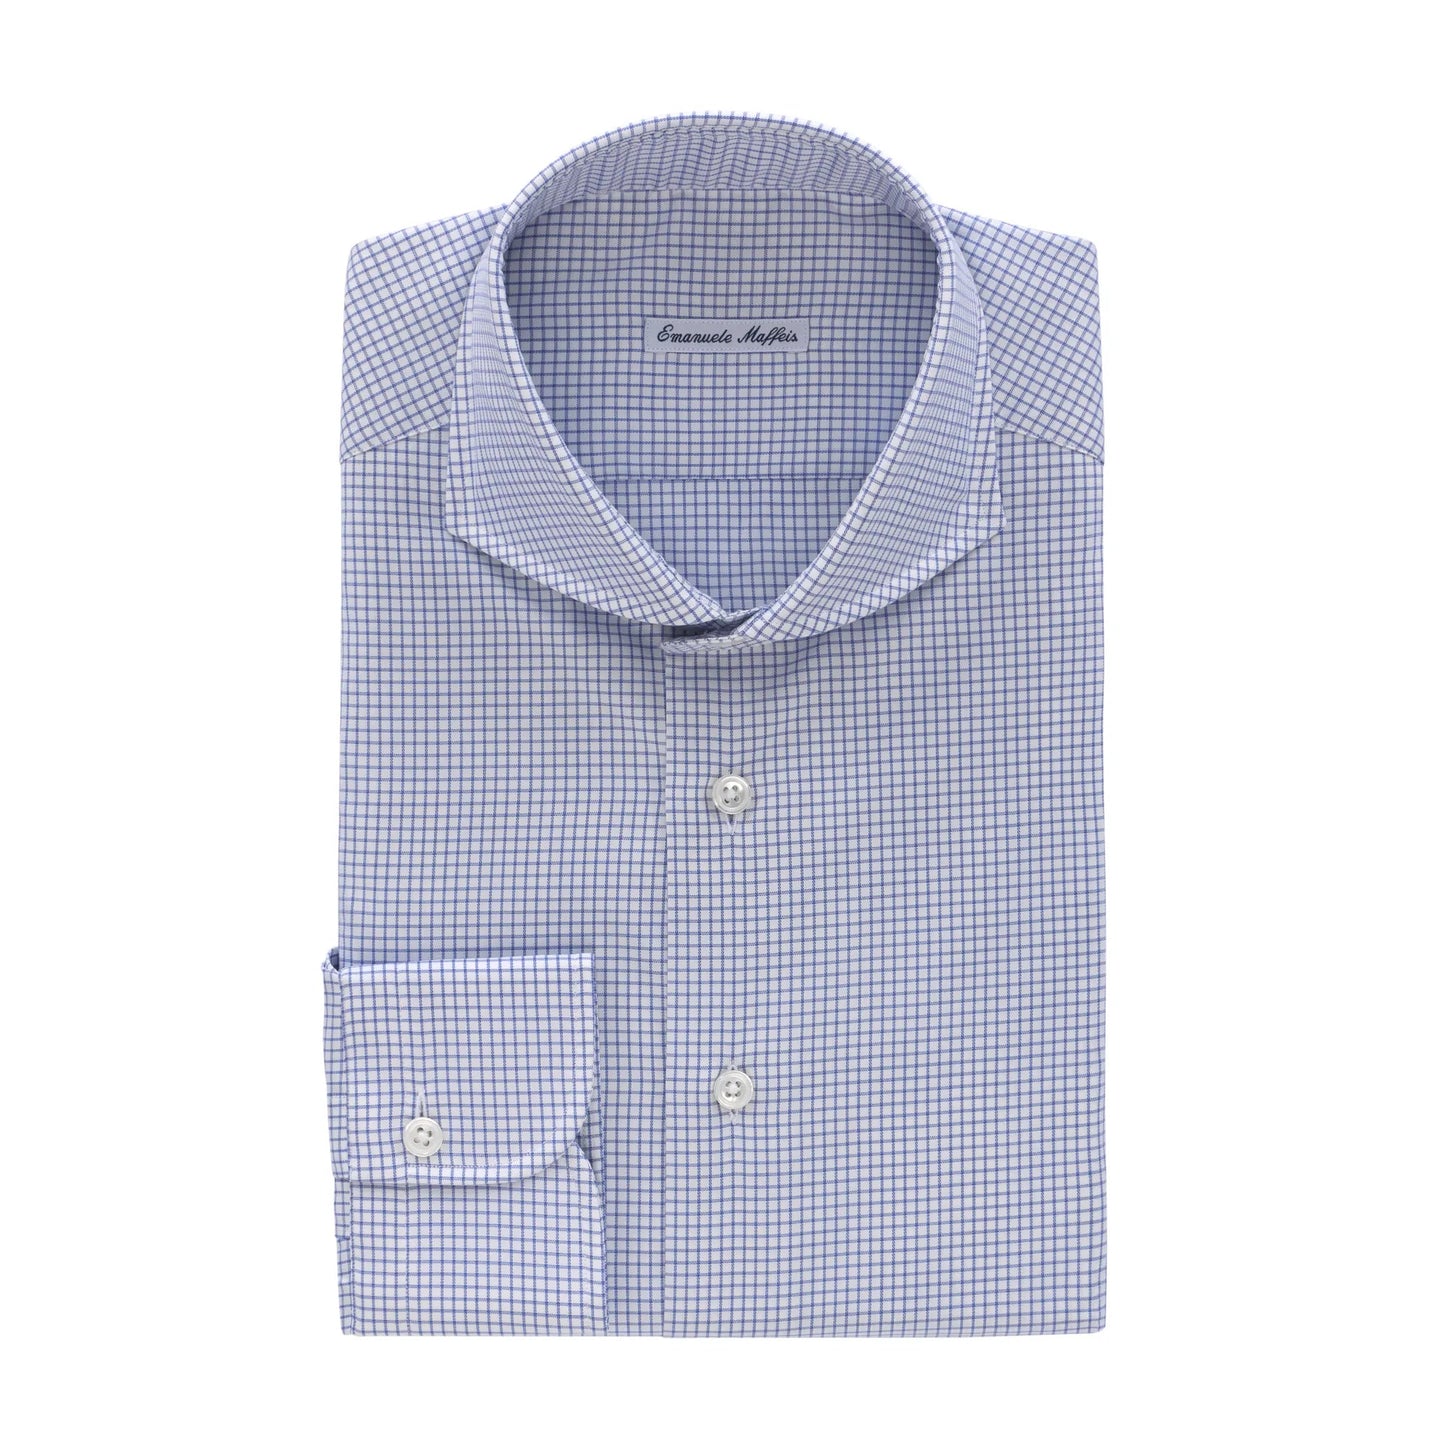 Emanuele Maffeis Cotton Checked Blue and White Shirt - SARTALE